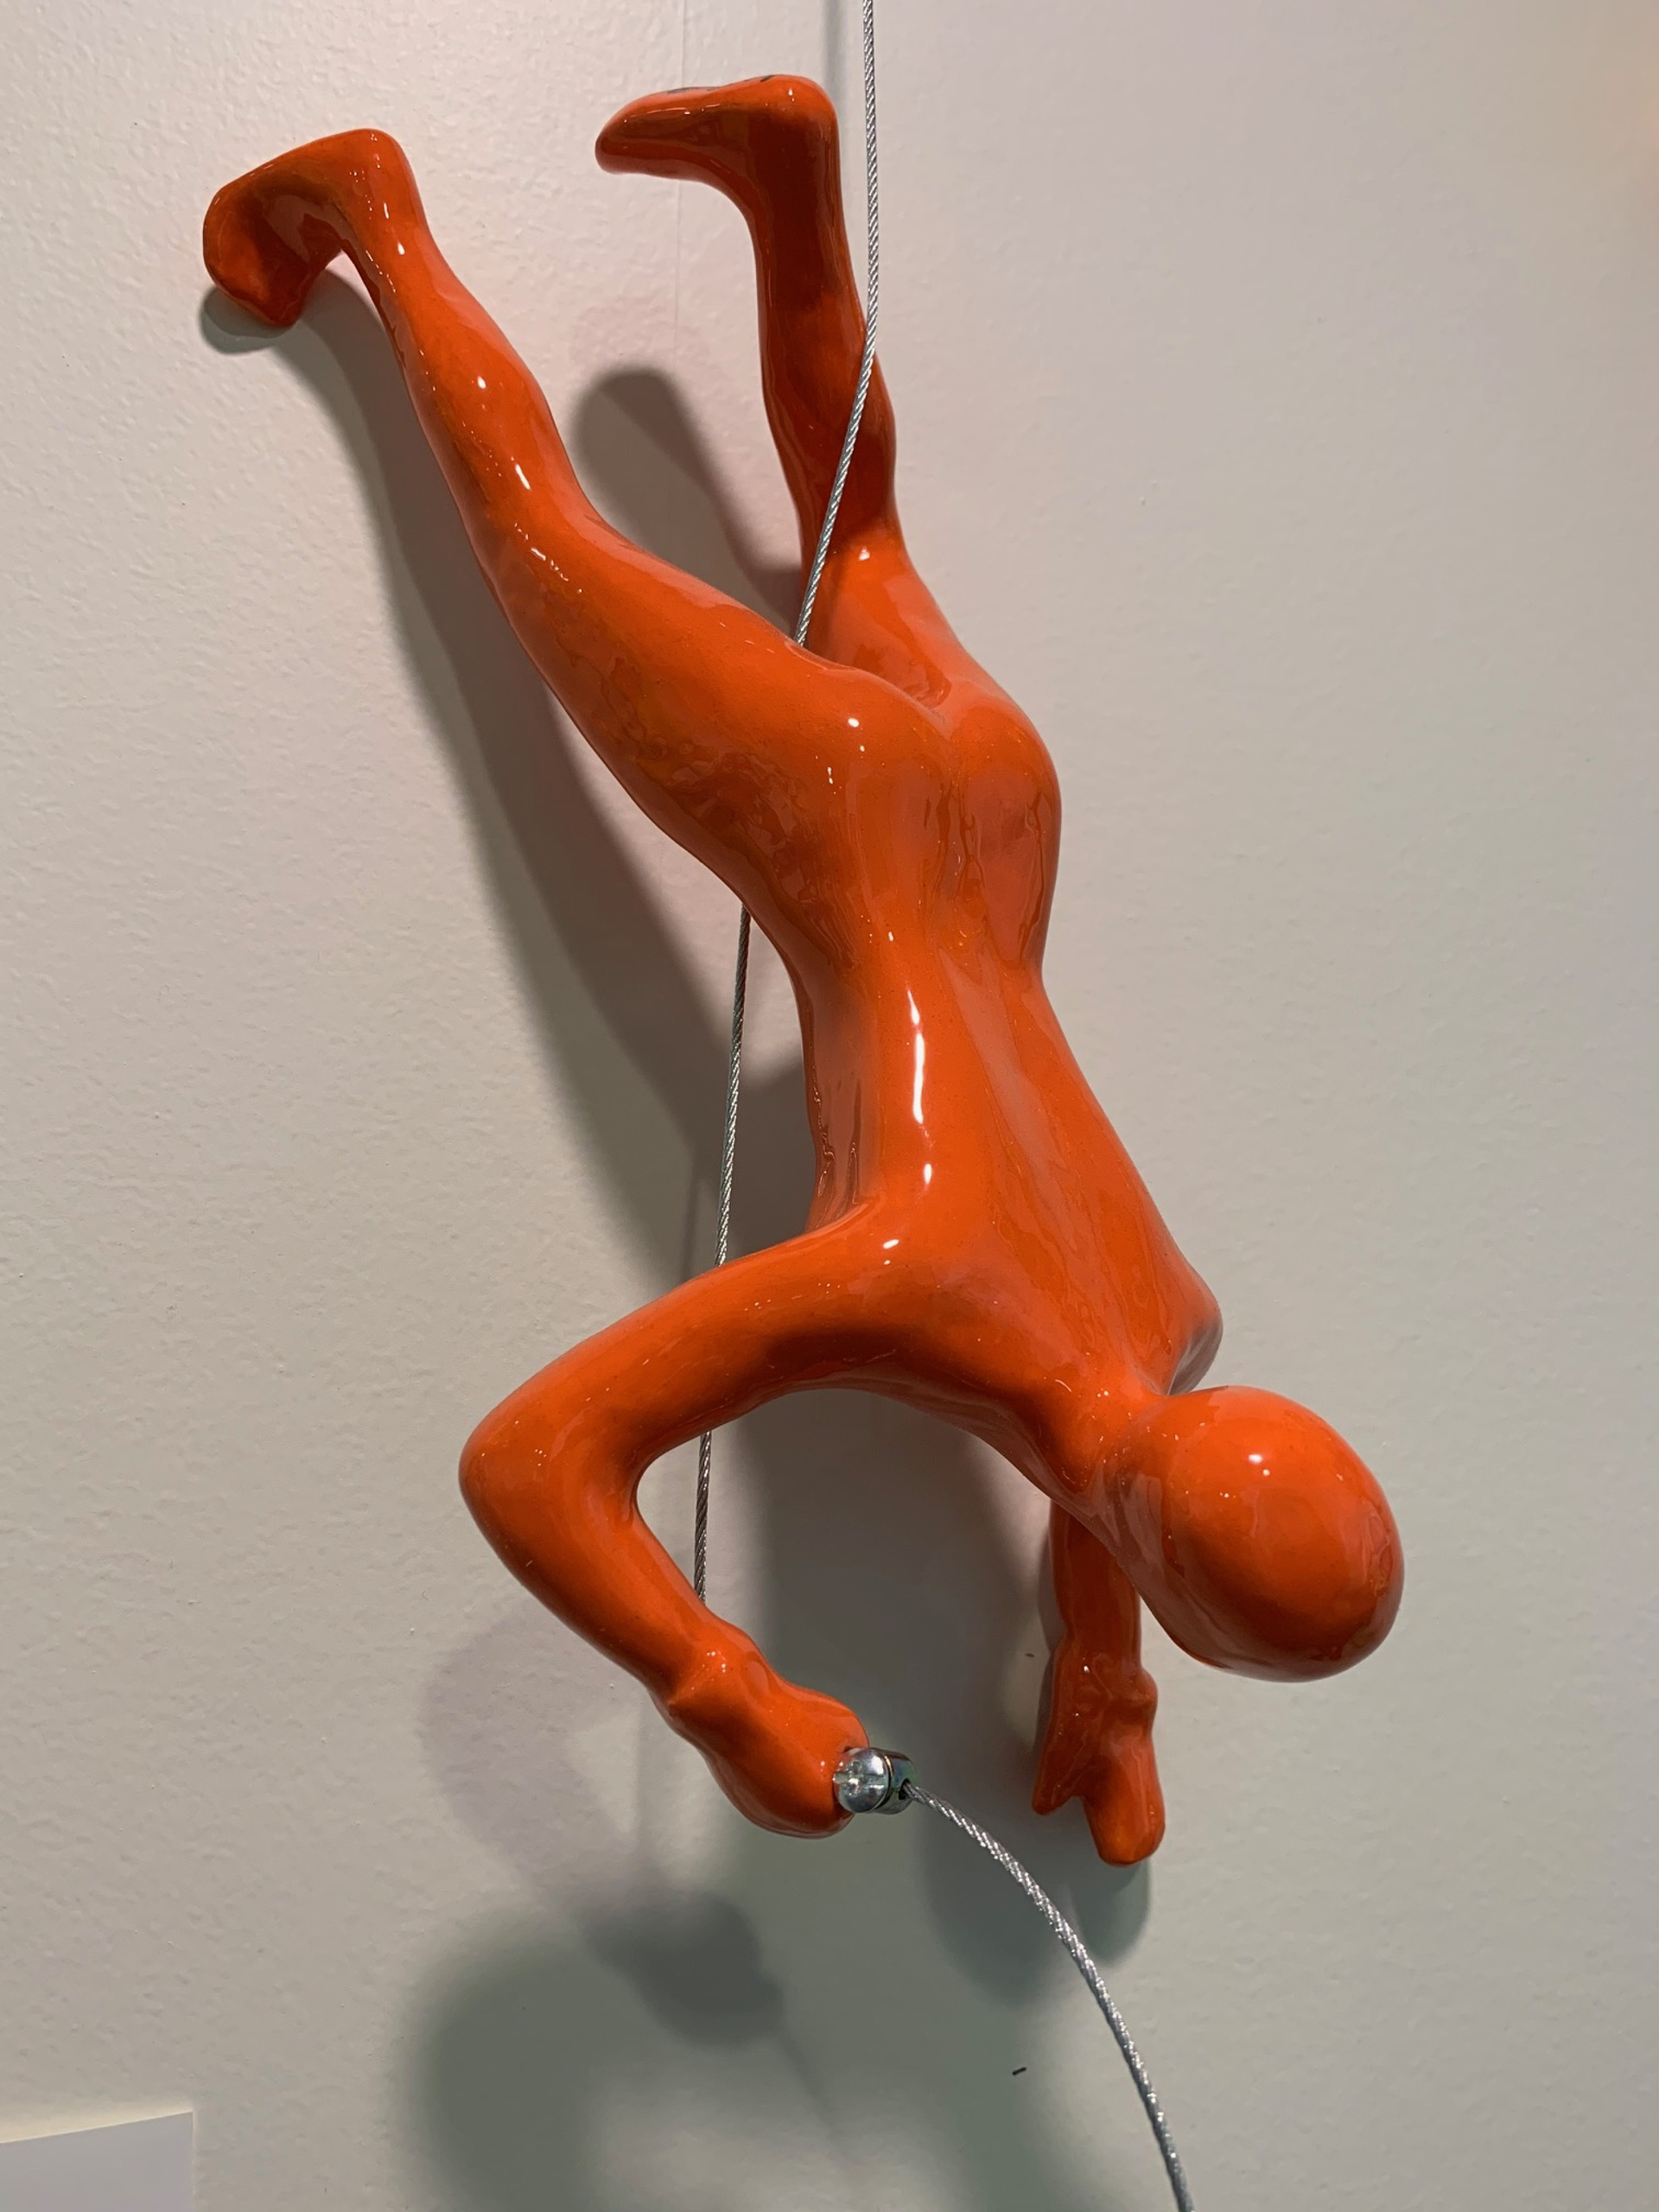 Wall Climber (#4 Orange) by Ancizar Marin